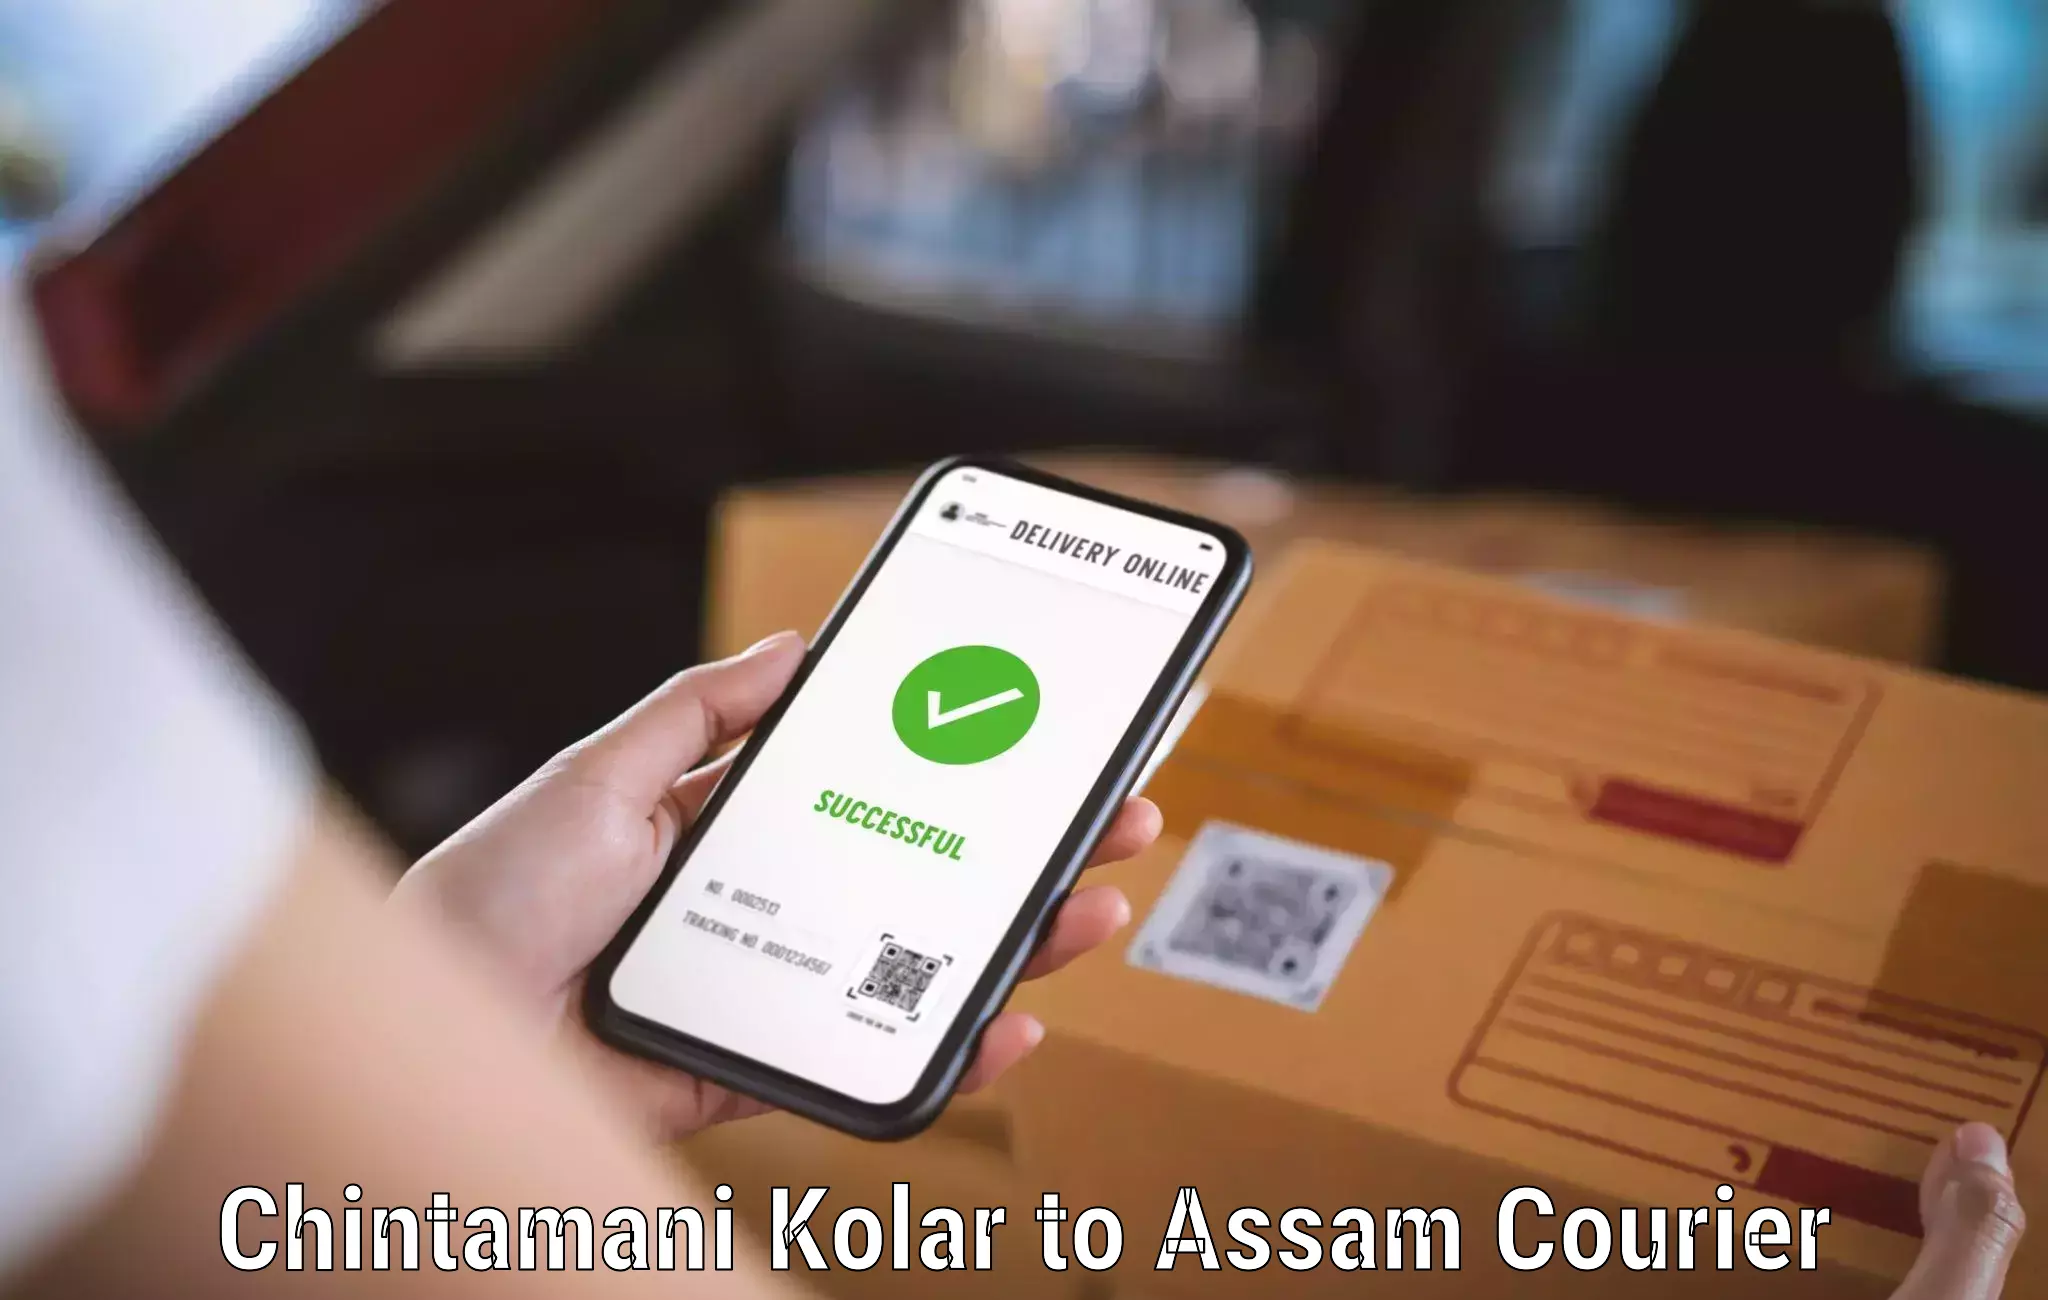 Expedited parcel delivery Chintamani Kolar to Dhubri